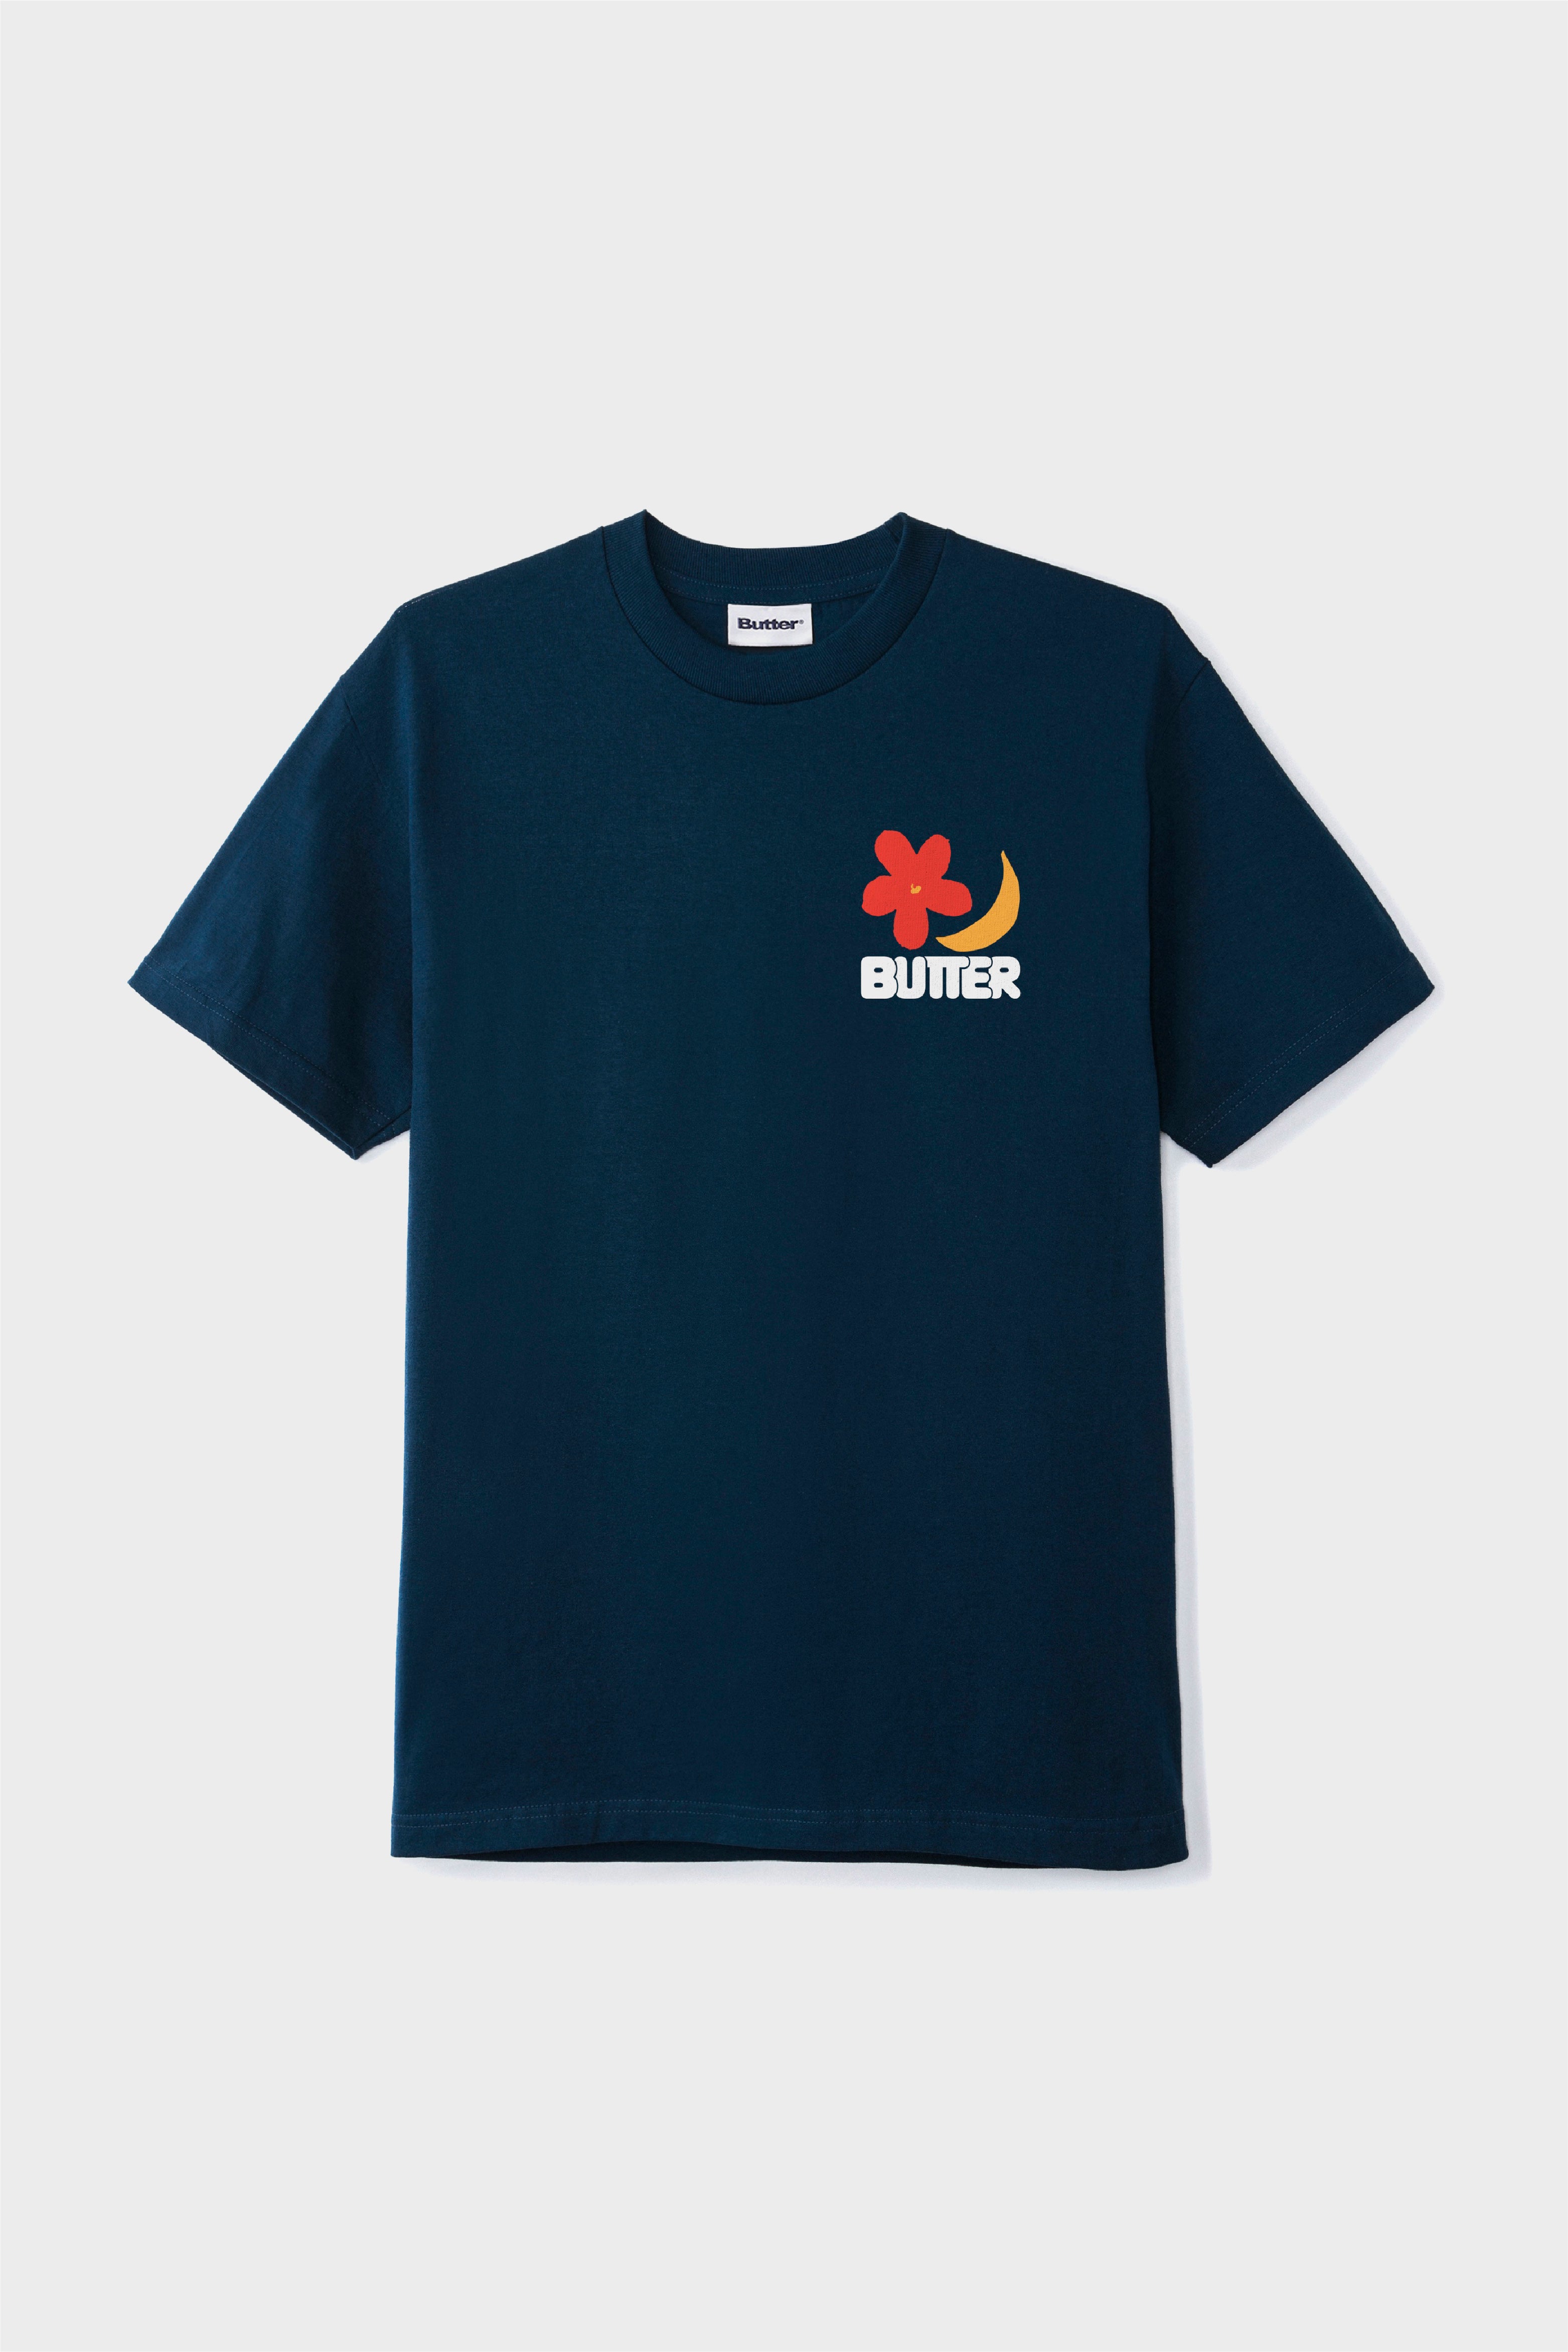 Selectshop FRAME - BUTTER GOODS Simple Materials Tee T-Shirts Concept Store Dubai